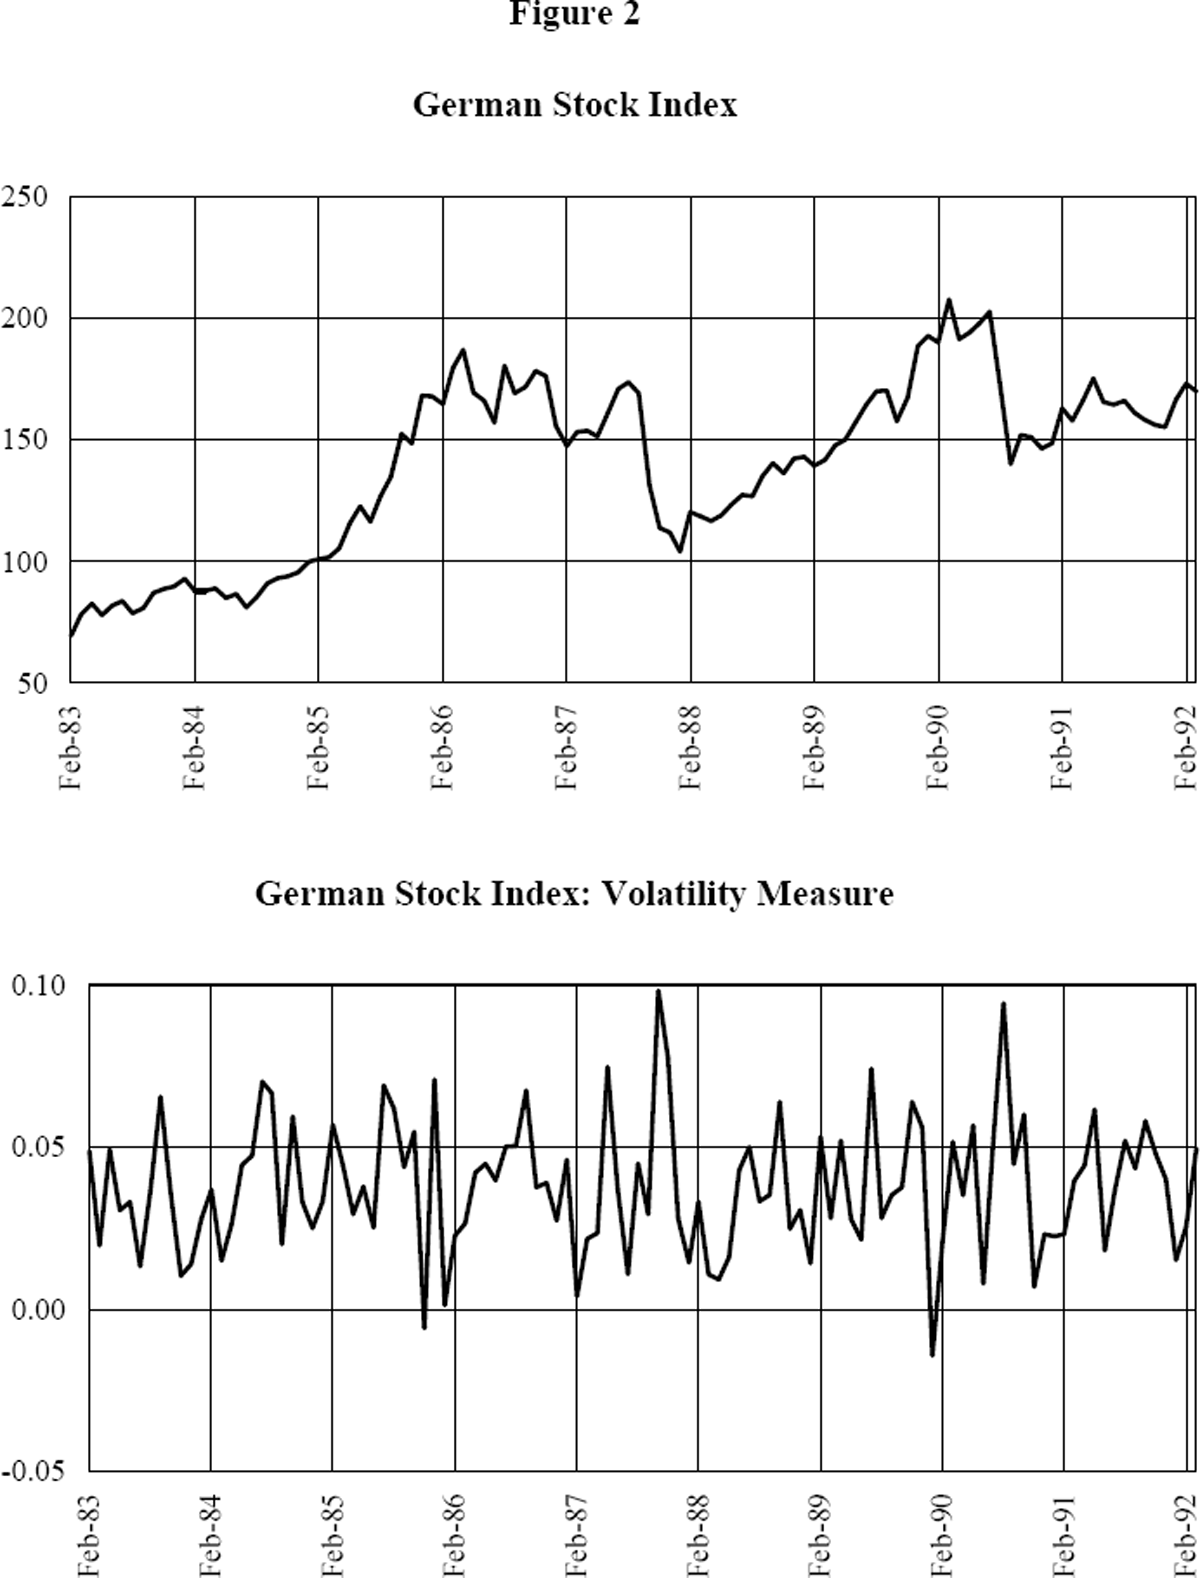 Figure 2: German Stock Index and Volatility Measure